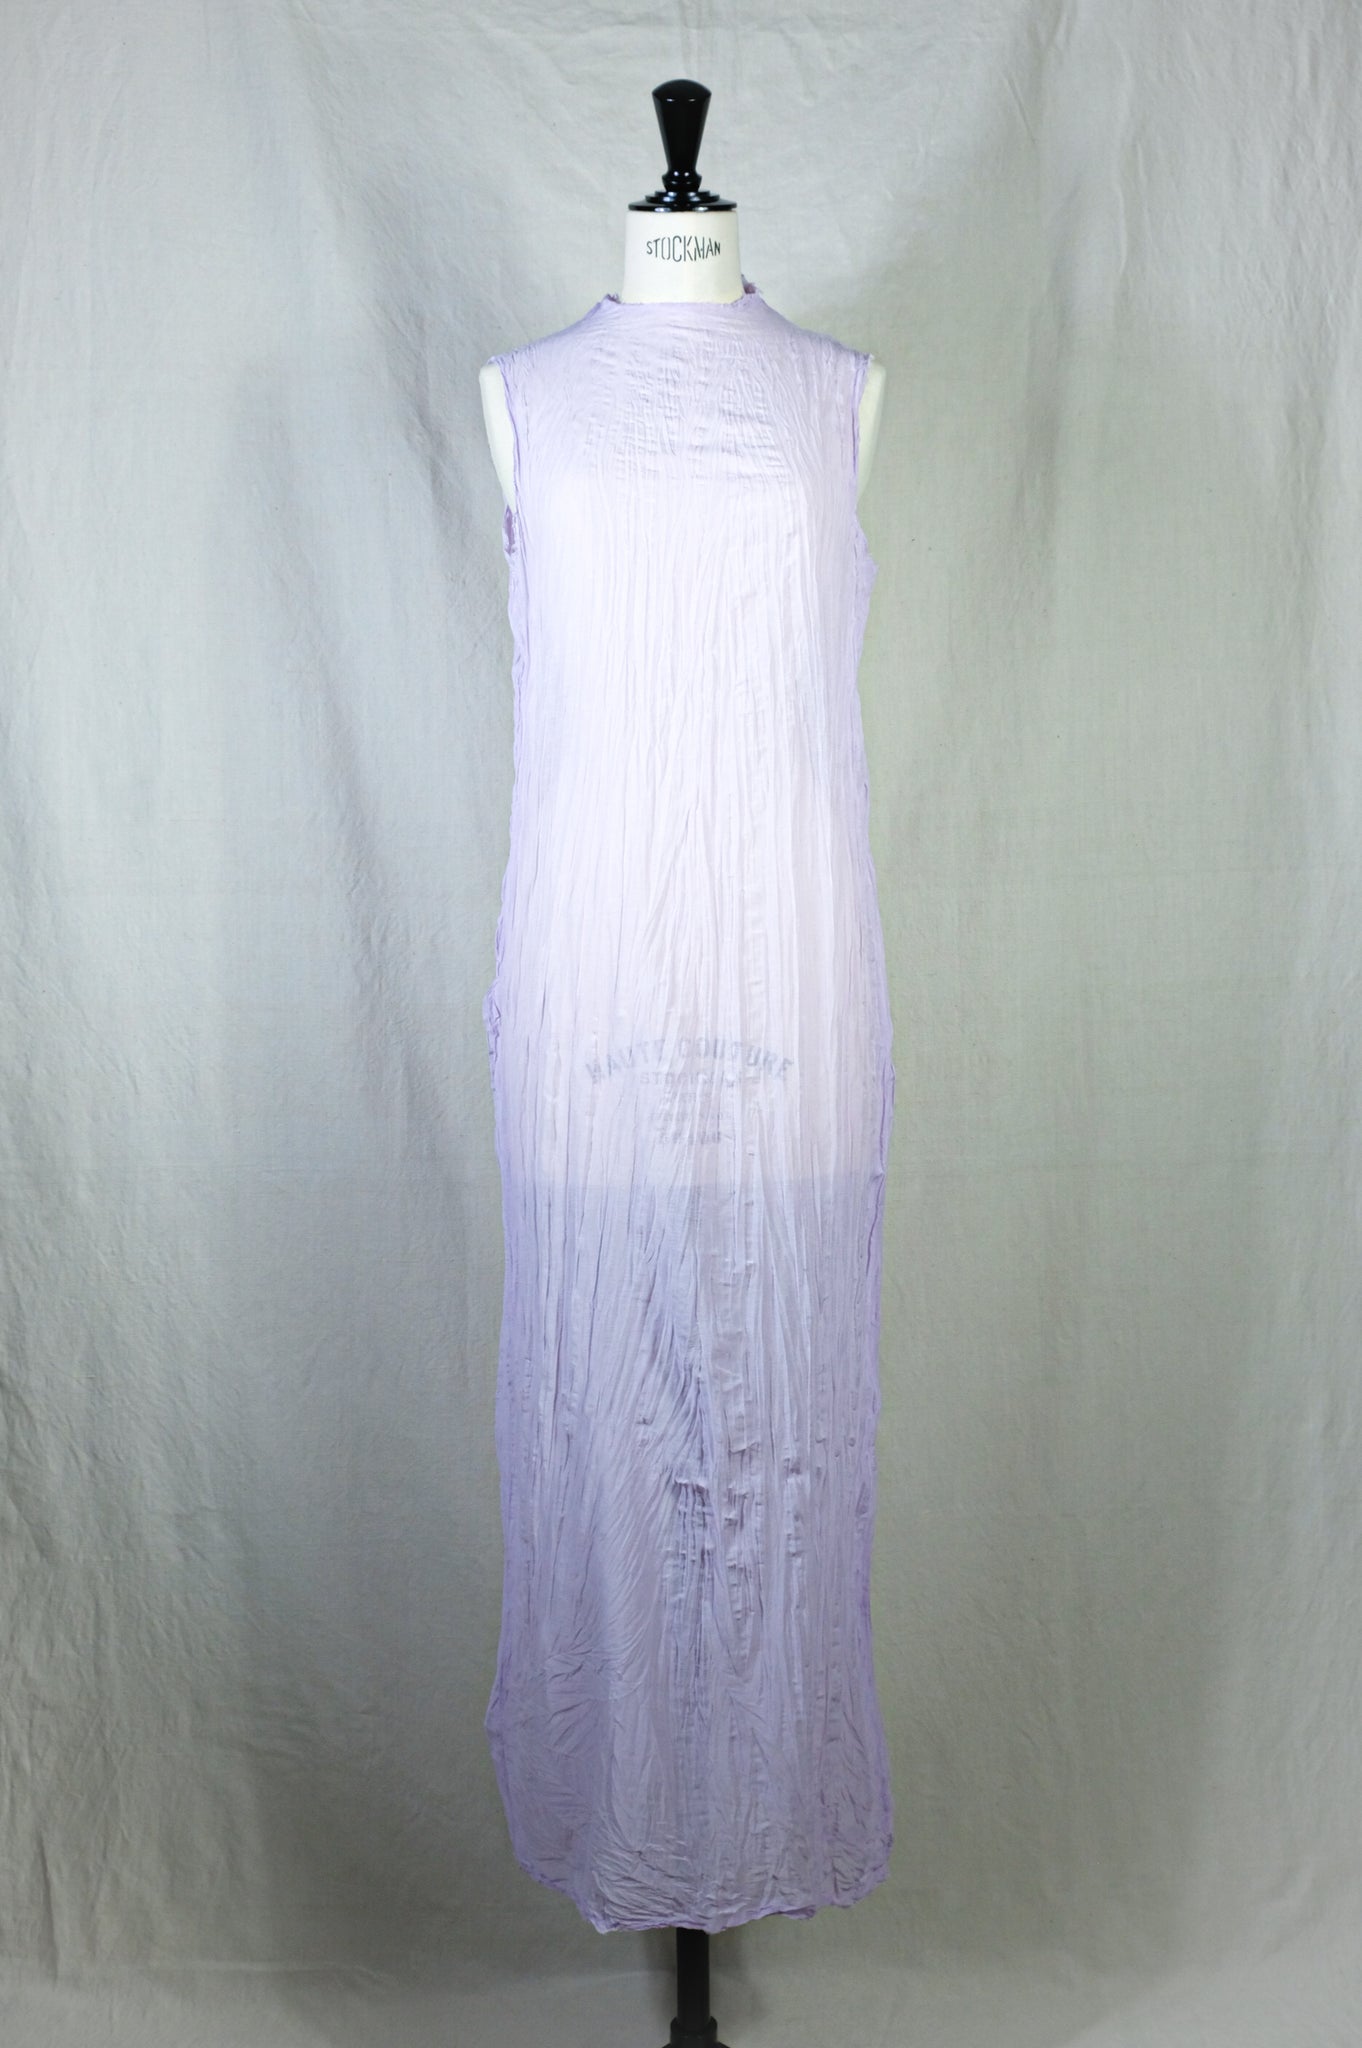 Gabriela Coll Garments "NO.265 CRUSHED TAFFETA SLEEVELESS DRESS"